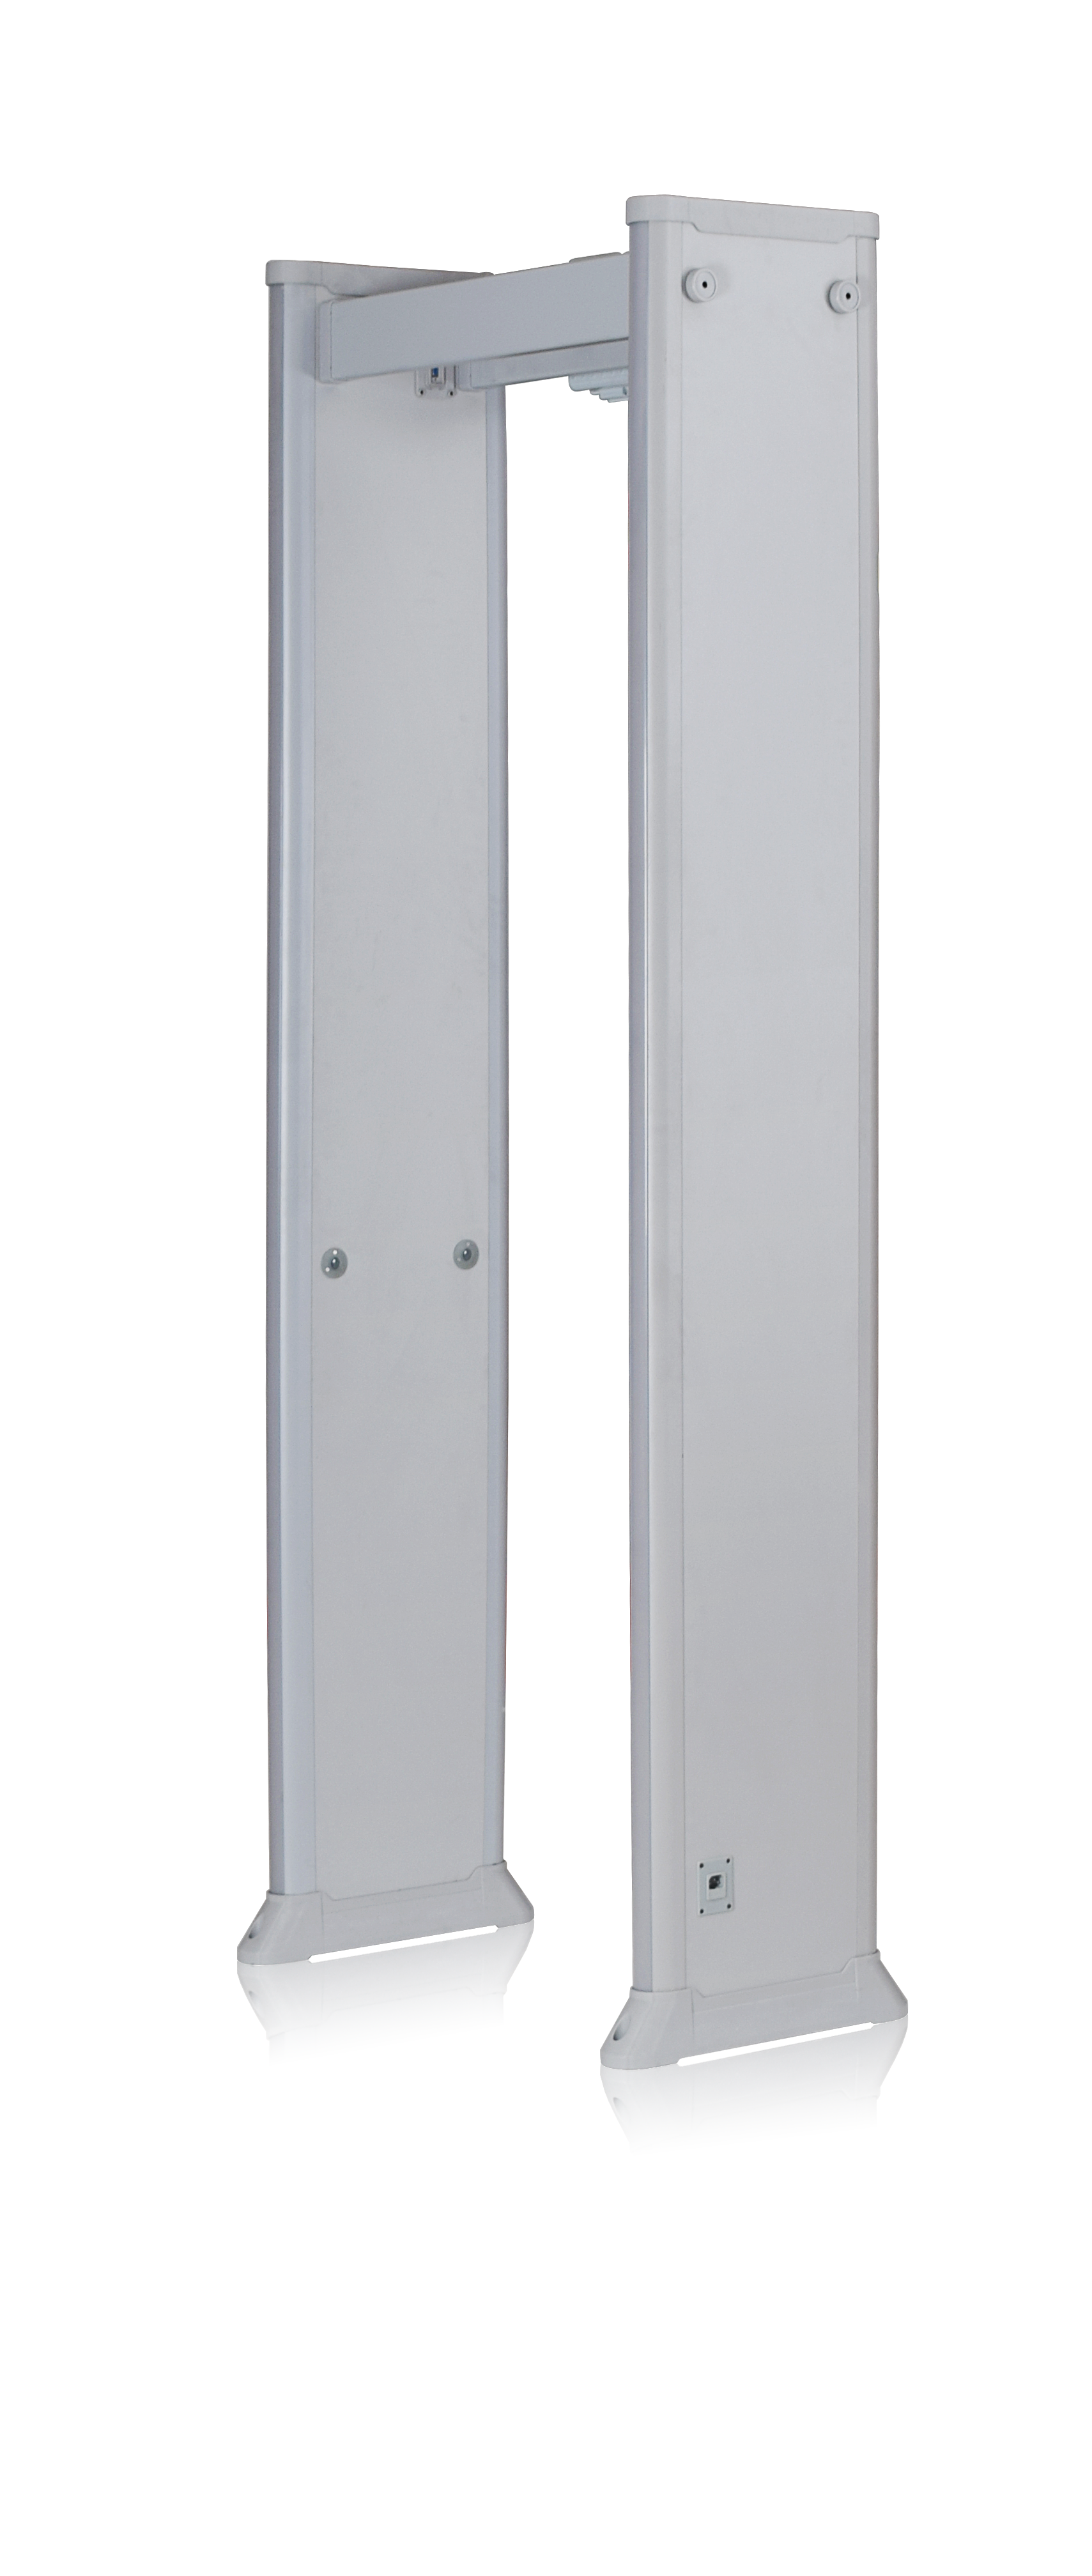  Anti-interference Door Frame Metal Detector Archway Metal Detector Security Gate